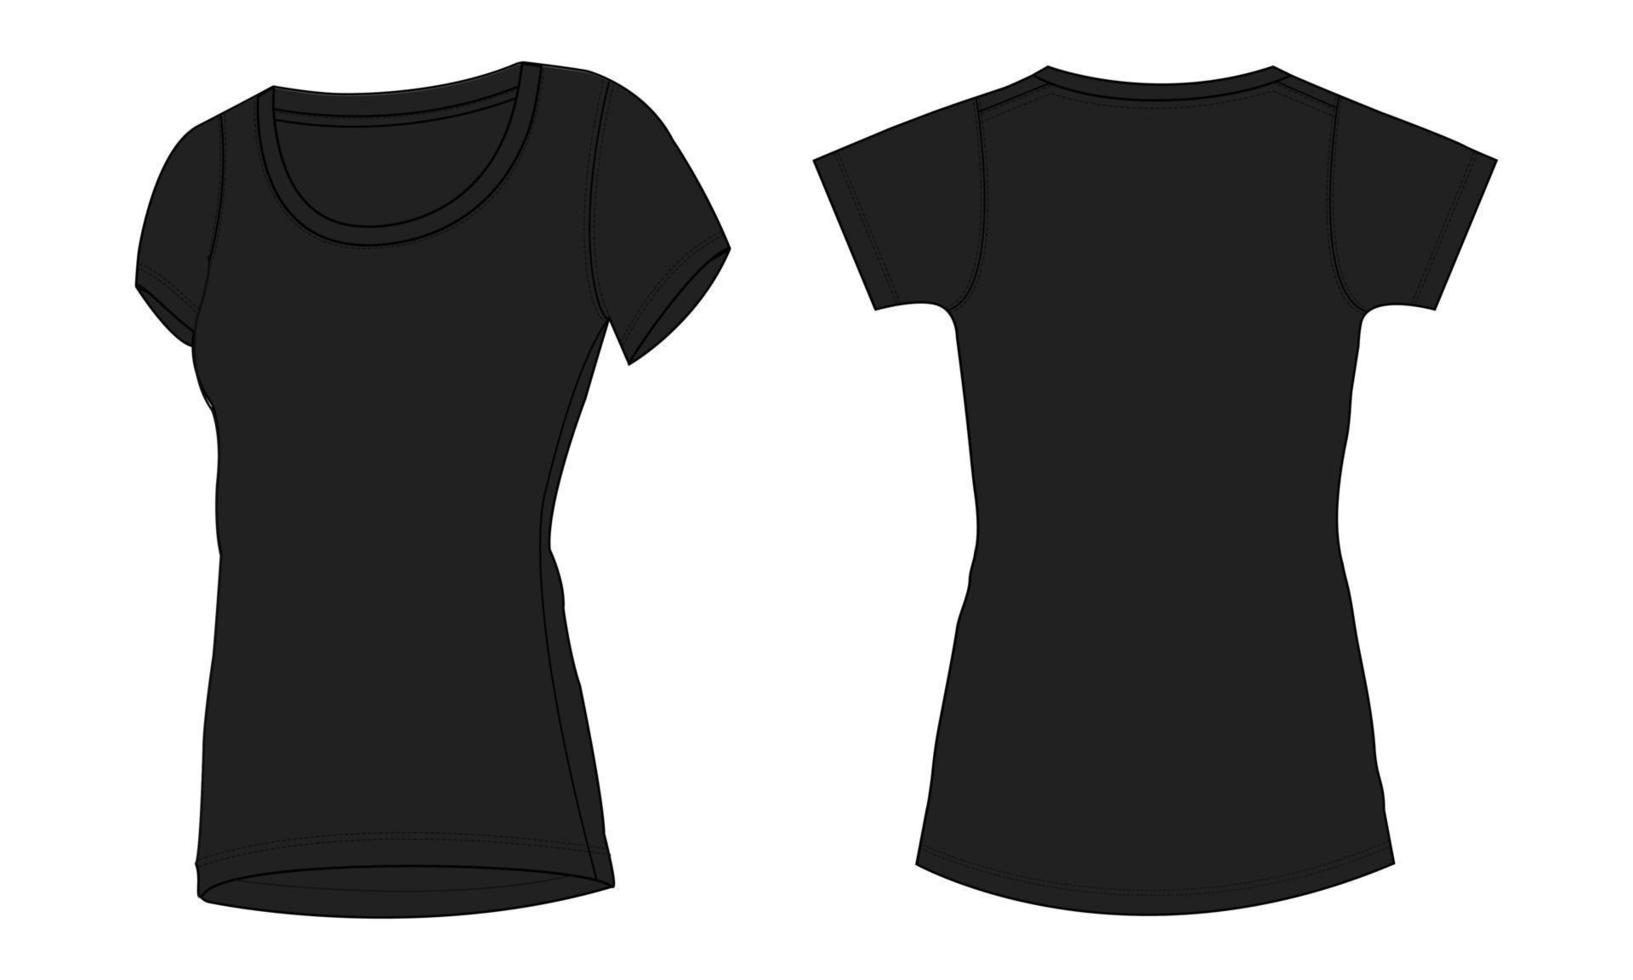 camiseta de manga corta ajustada moda técnica boceto plano ilustración vectorial plantilla de color negro para damas vector